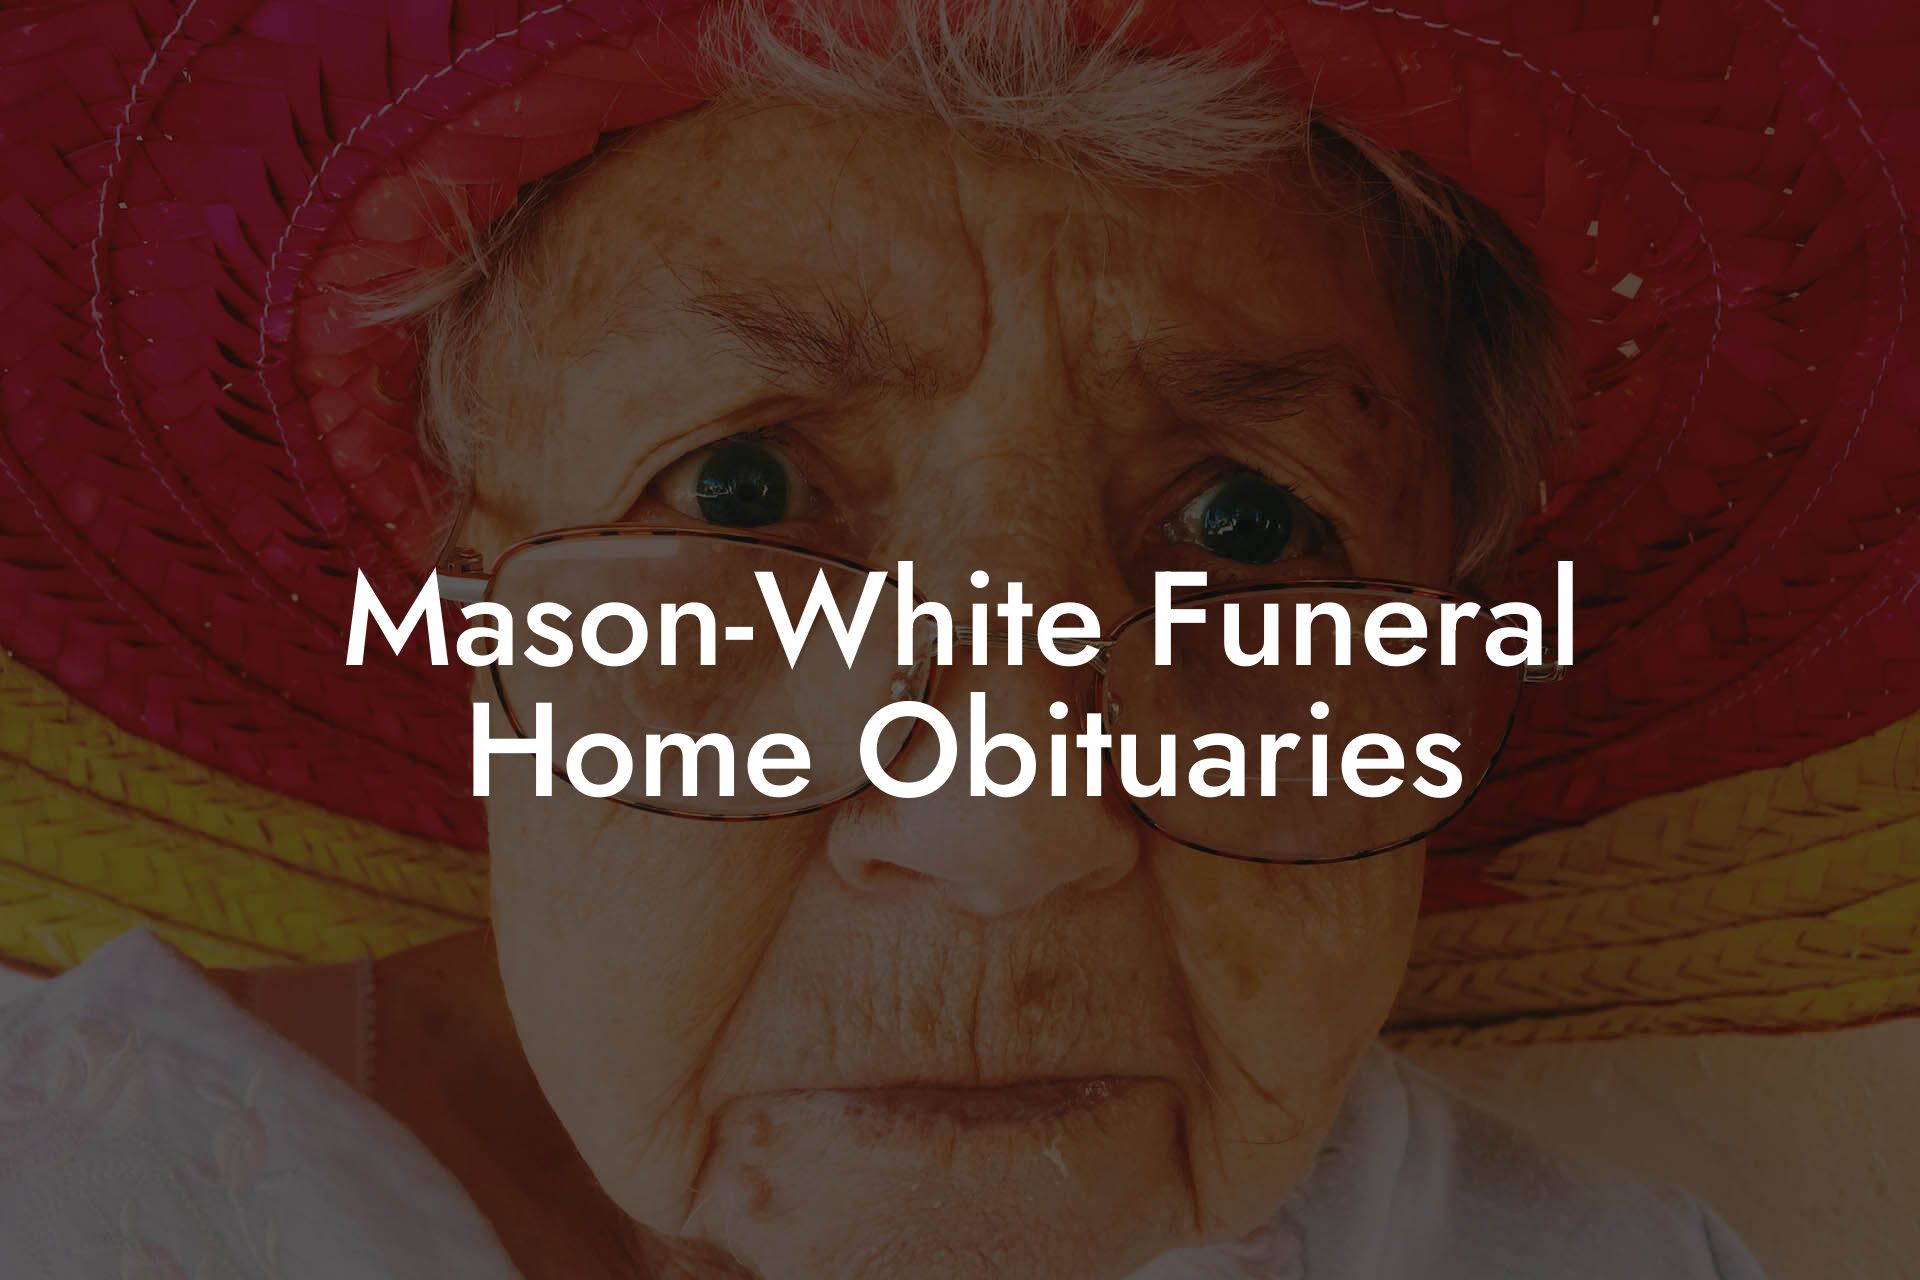 Mason-White Funeral Home Obituaries